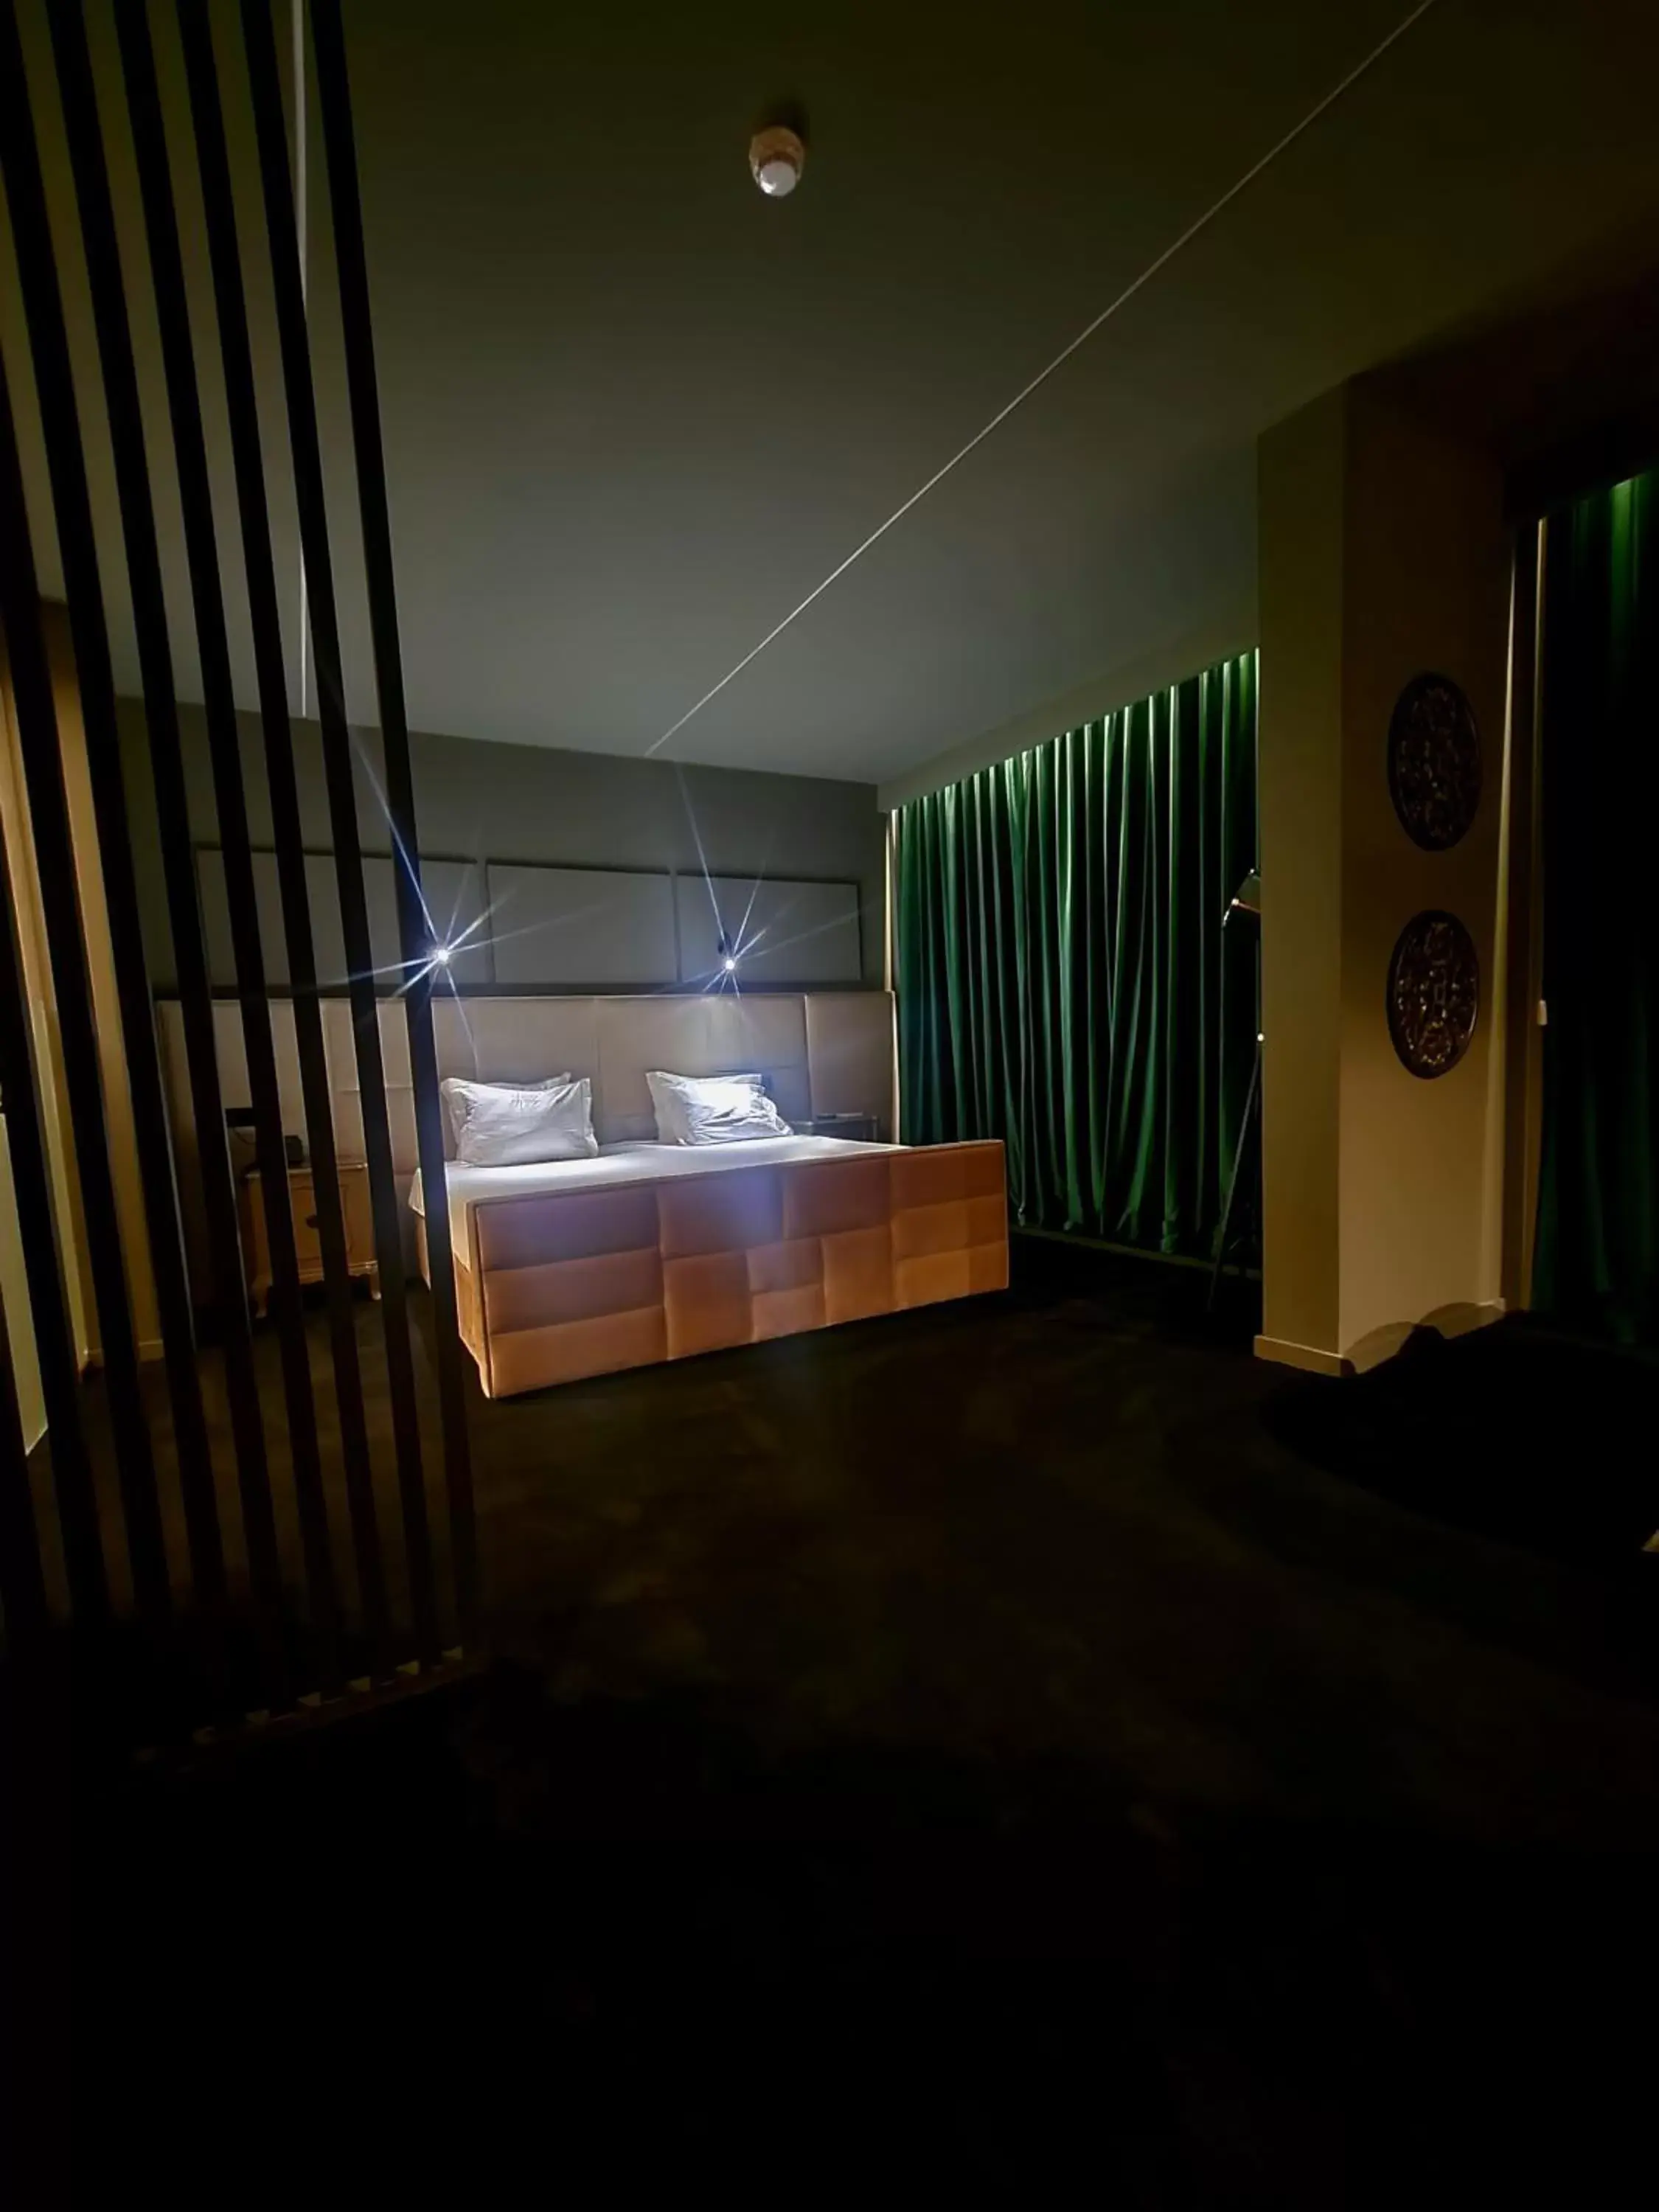 Bed in Rubens Hotels Royal Village Porto Gaia